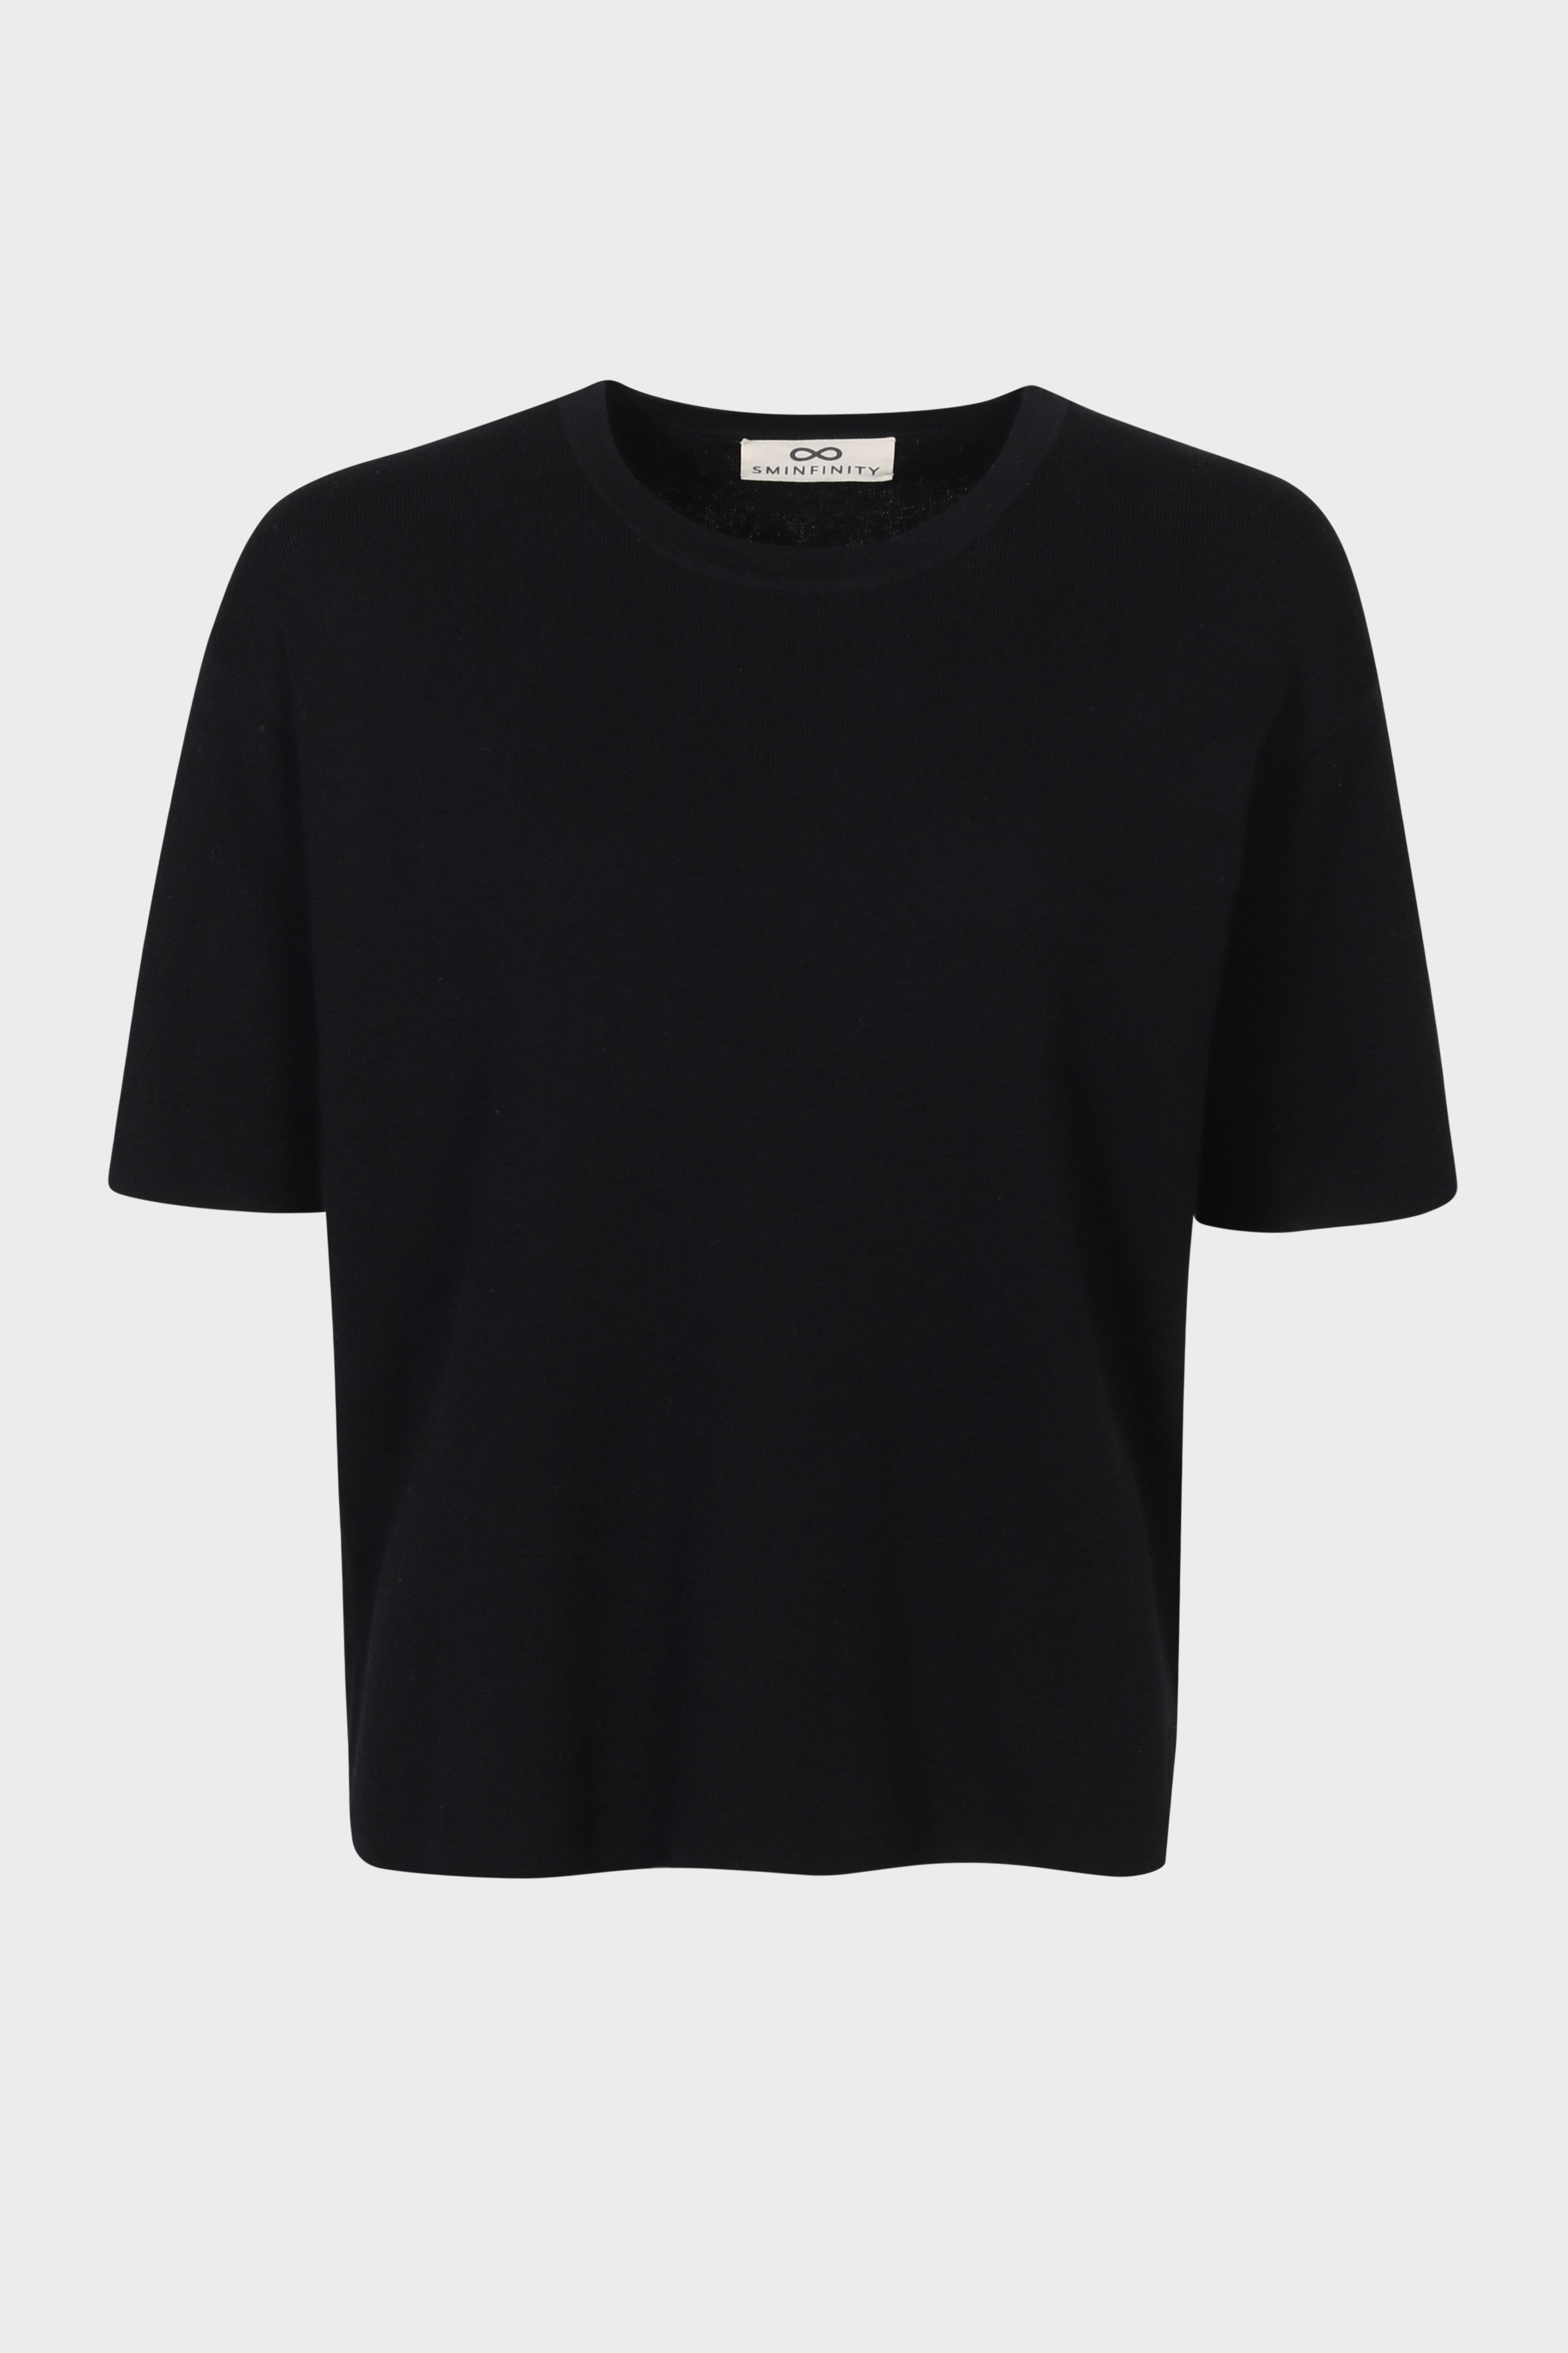 SMINFINITY Knit T-Shirt in Black M/L